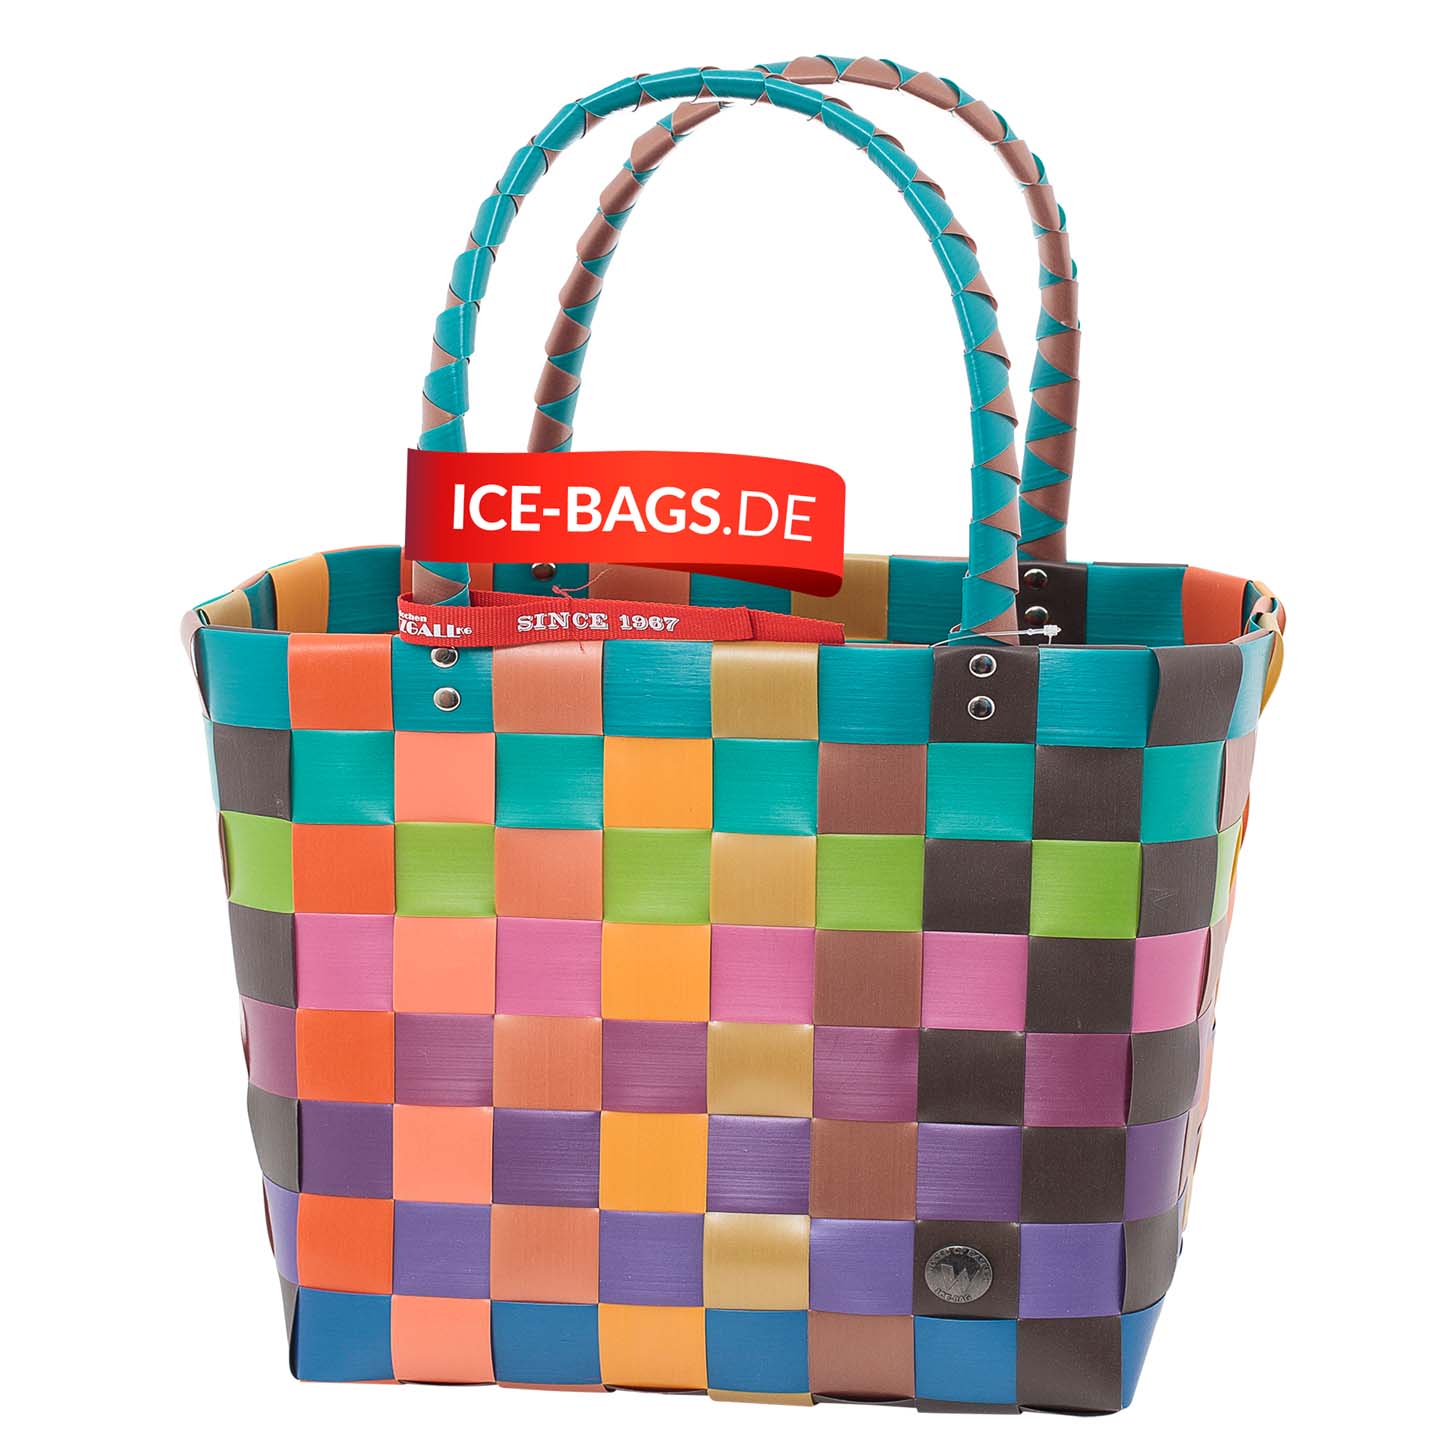 Witzgall Ice bag 5010 15 Shopper Einkaufstasche Korb pink grün mint petrol 